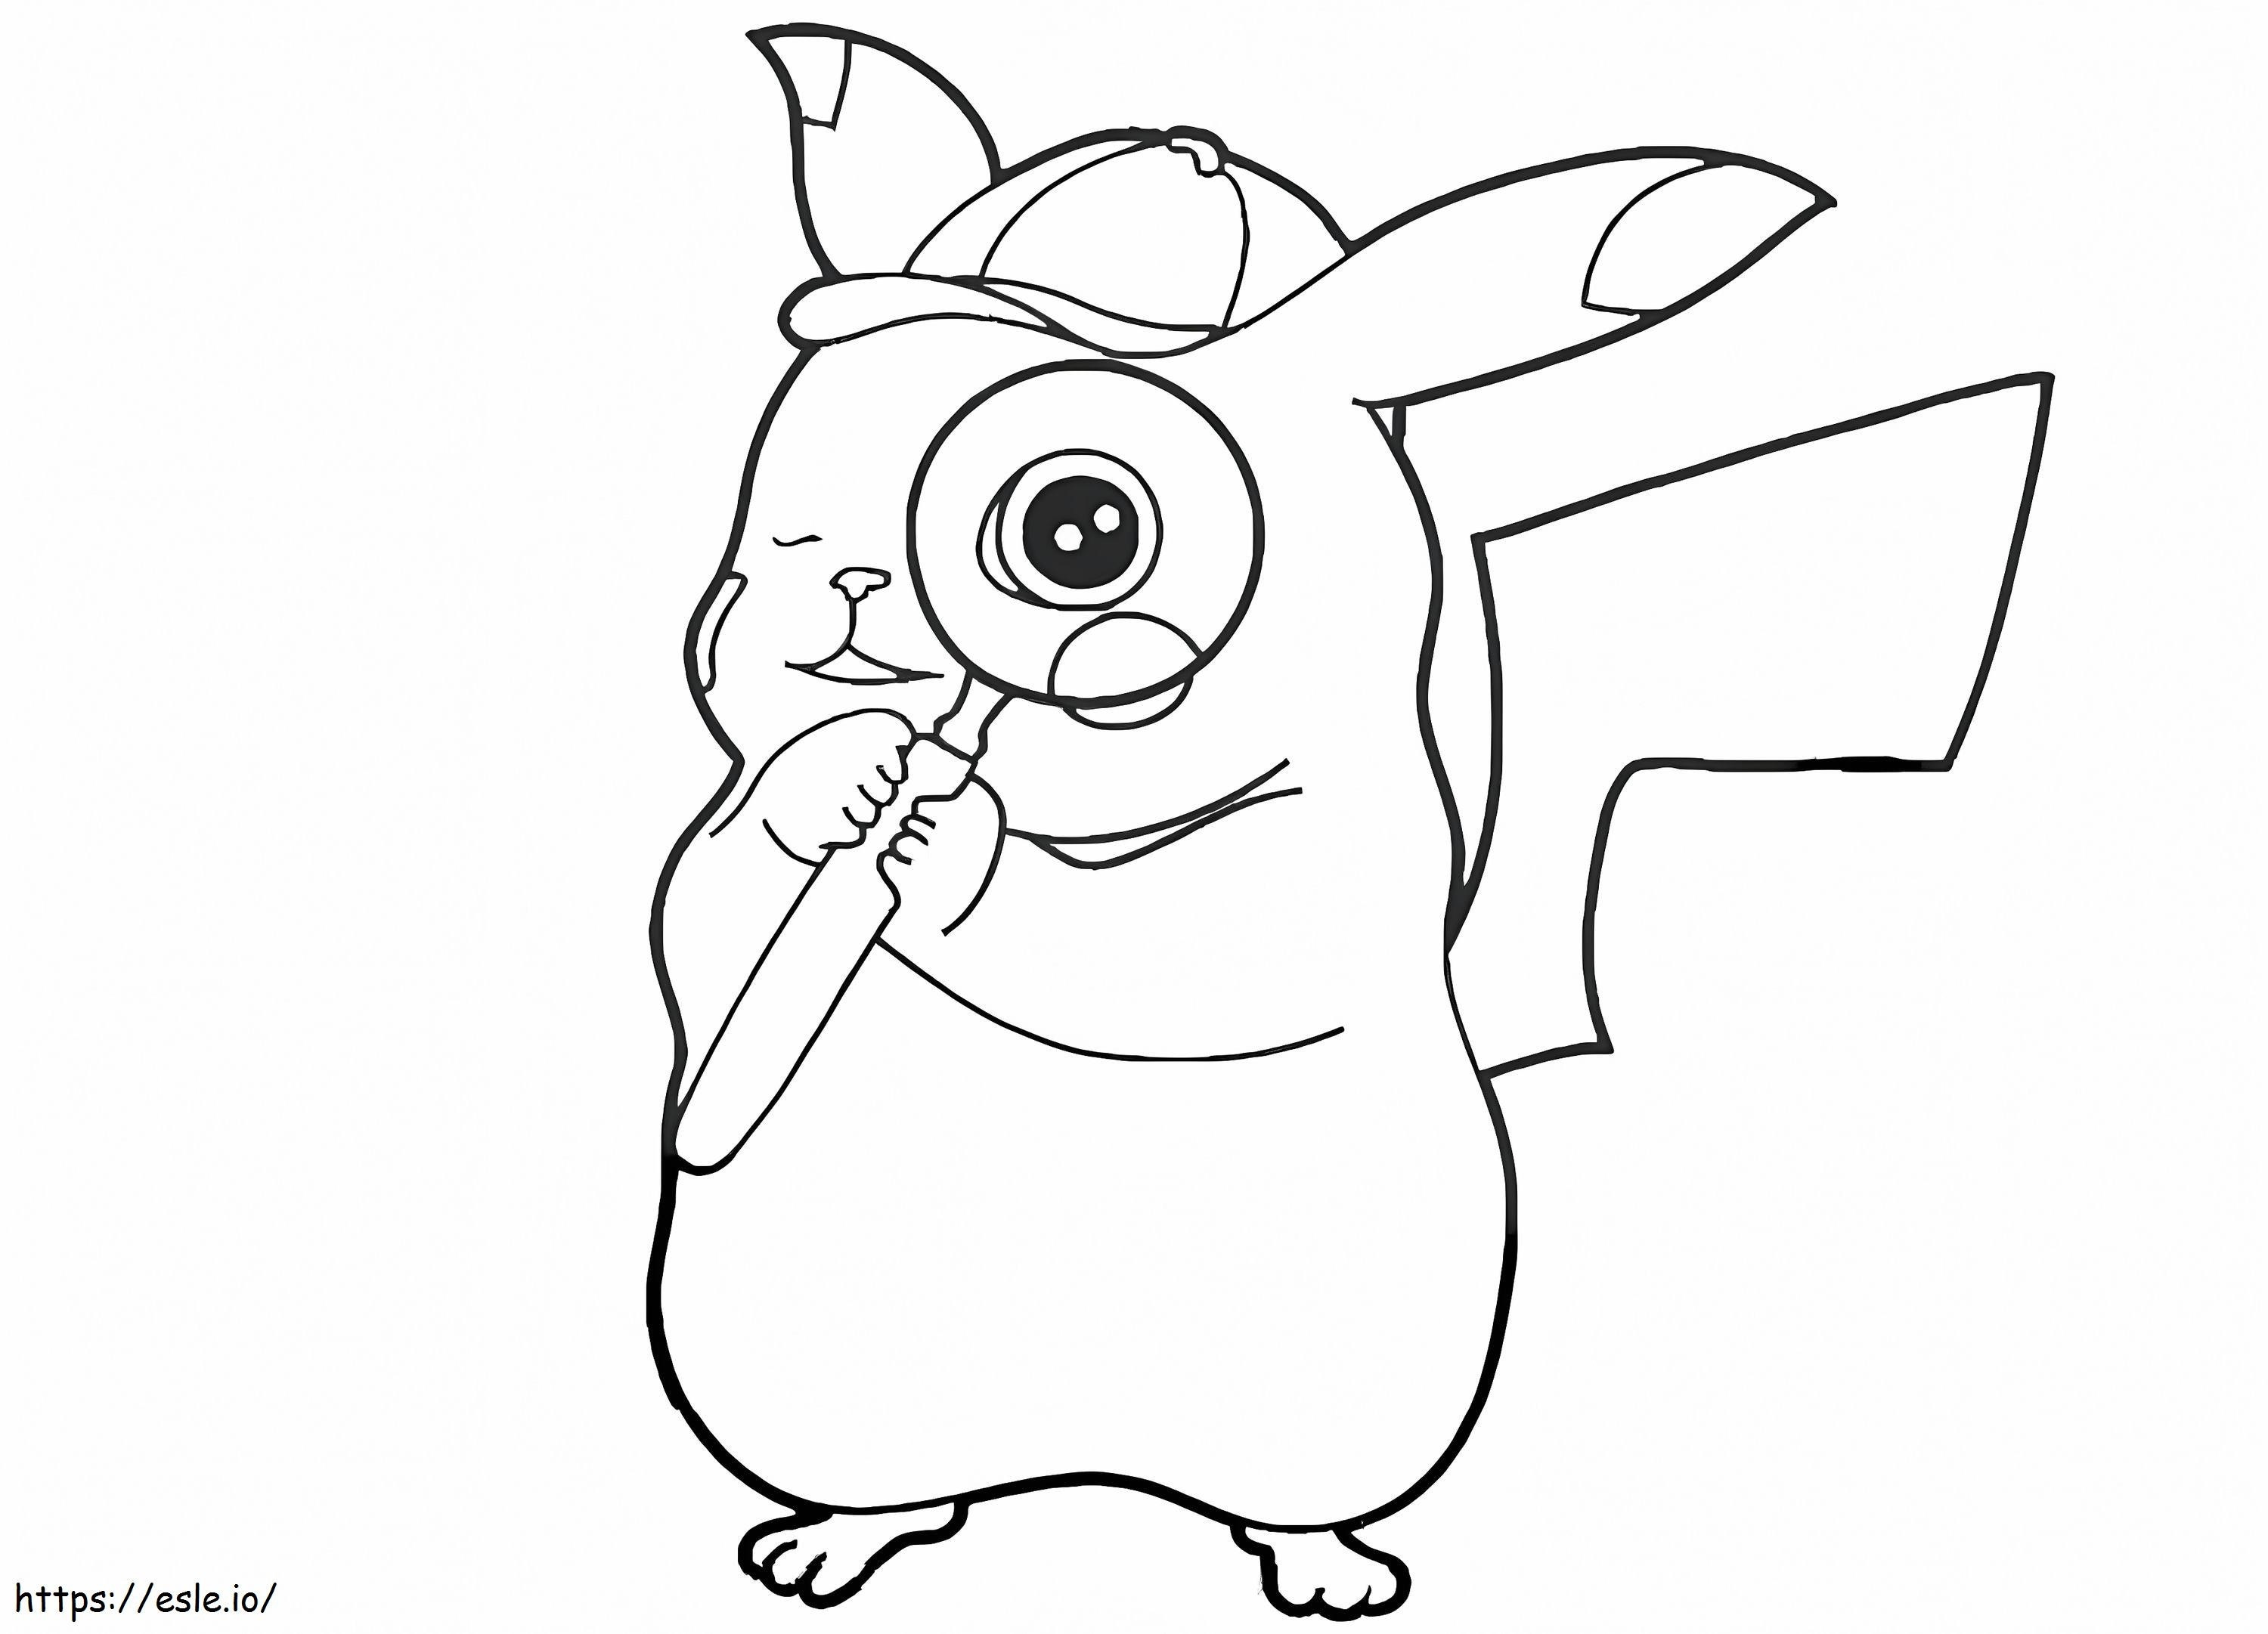 Lindo-detective Pikachu kleurplaat kleurplaat